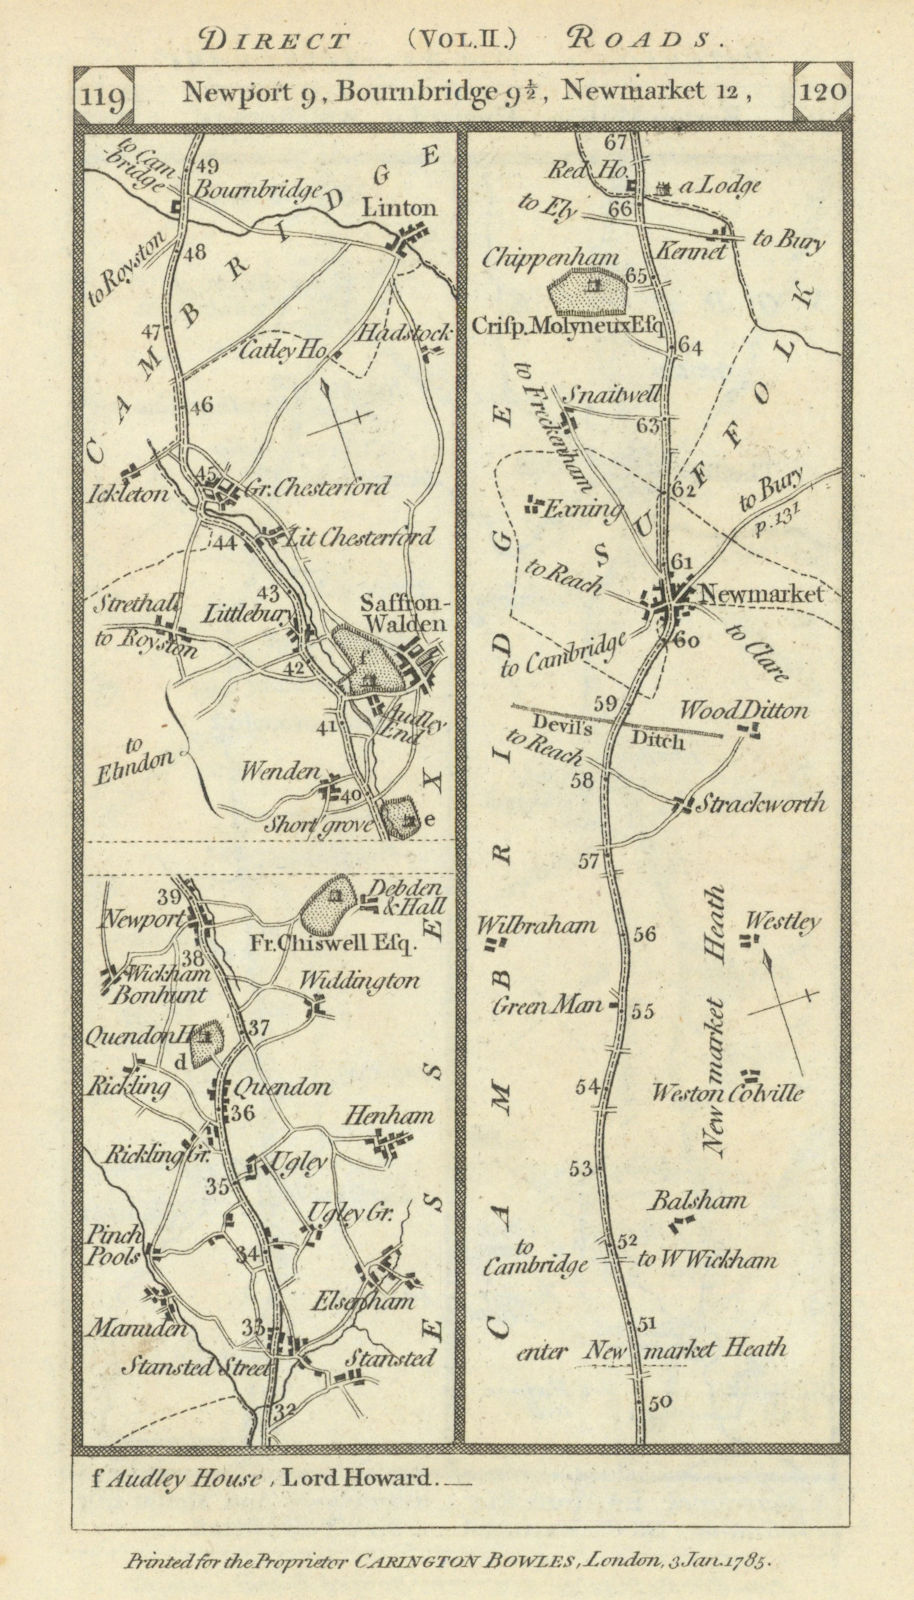 Stansted - Saffron Walden - Linton - Newmarket road strip map PATERSON 1785